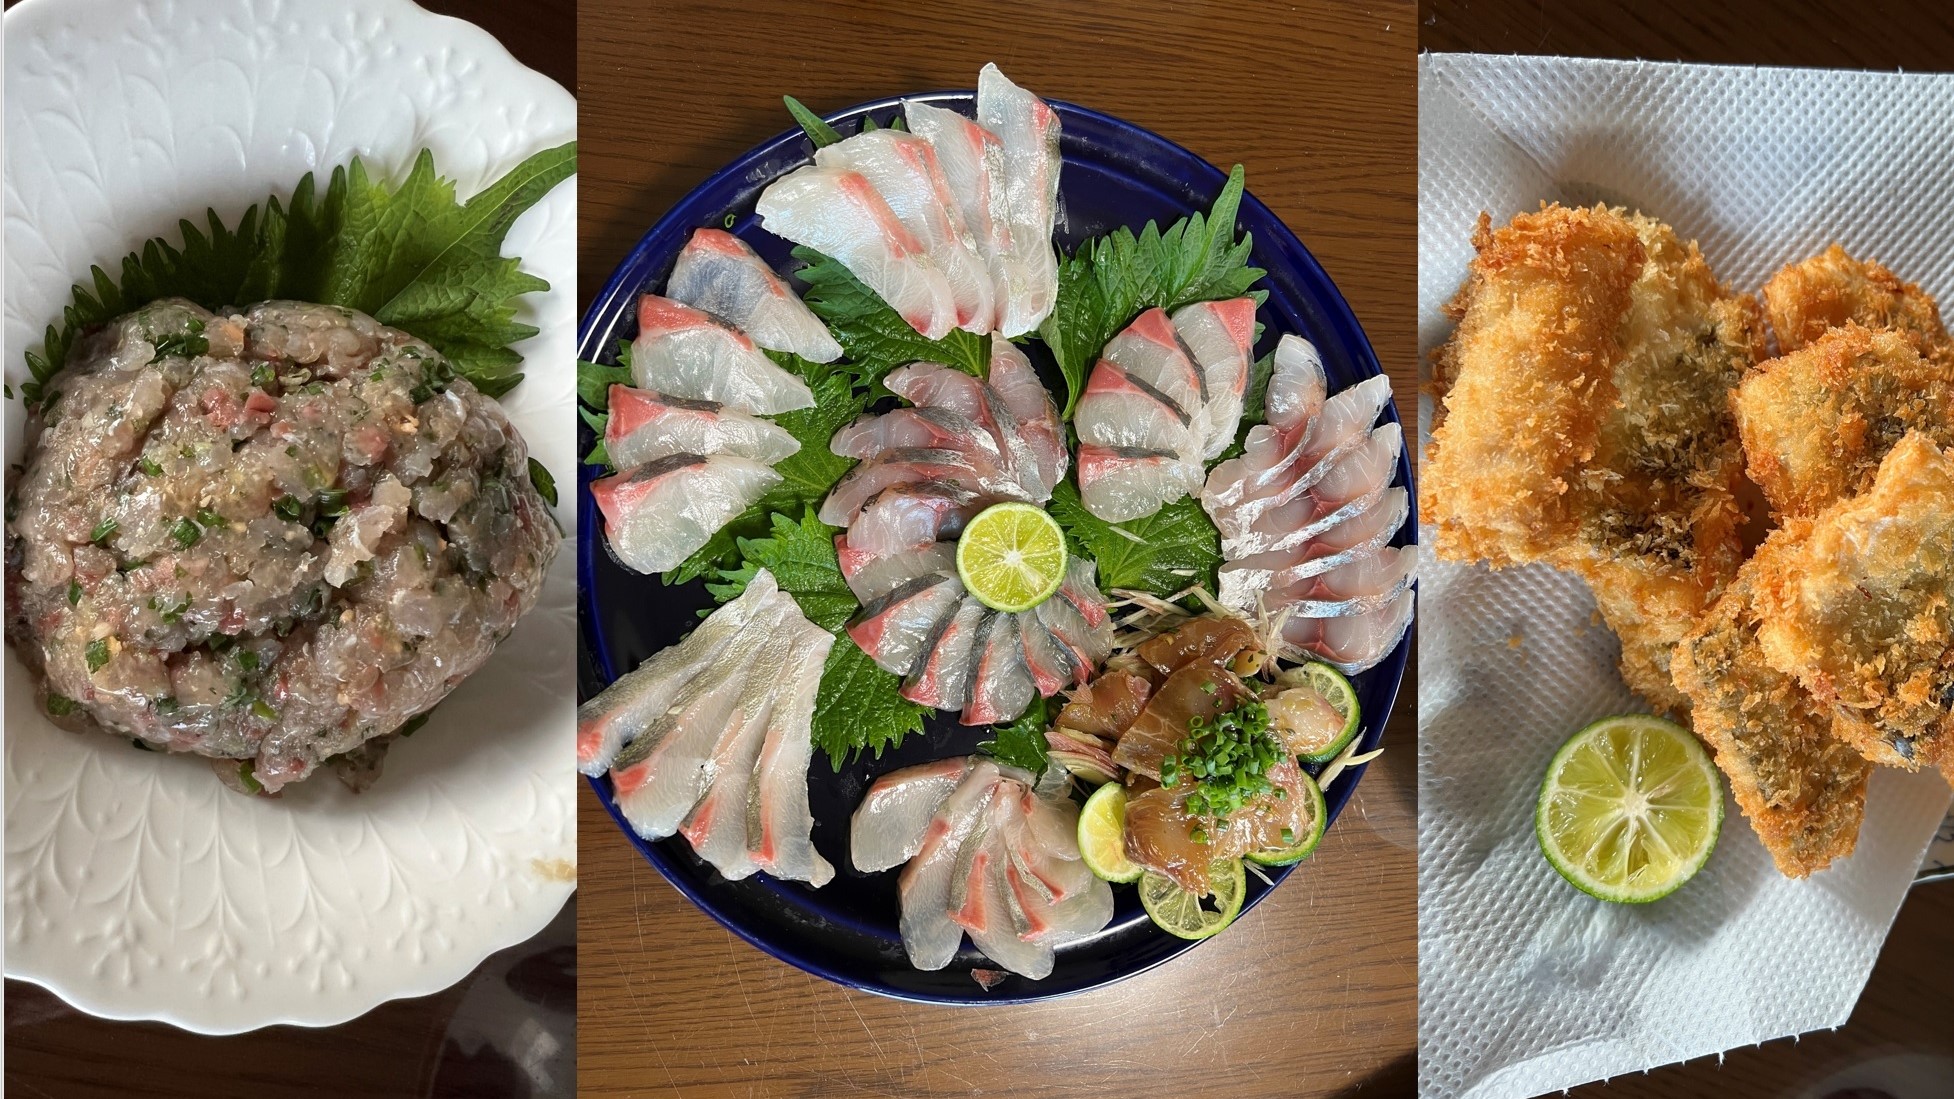 Kyo-kaiseki cuisine